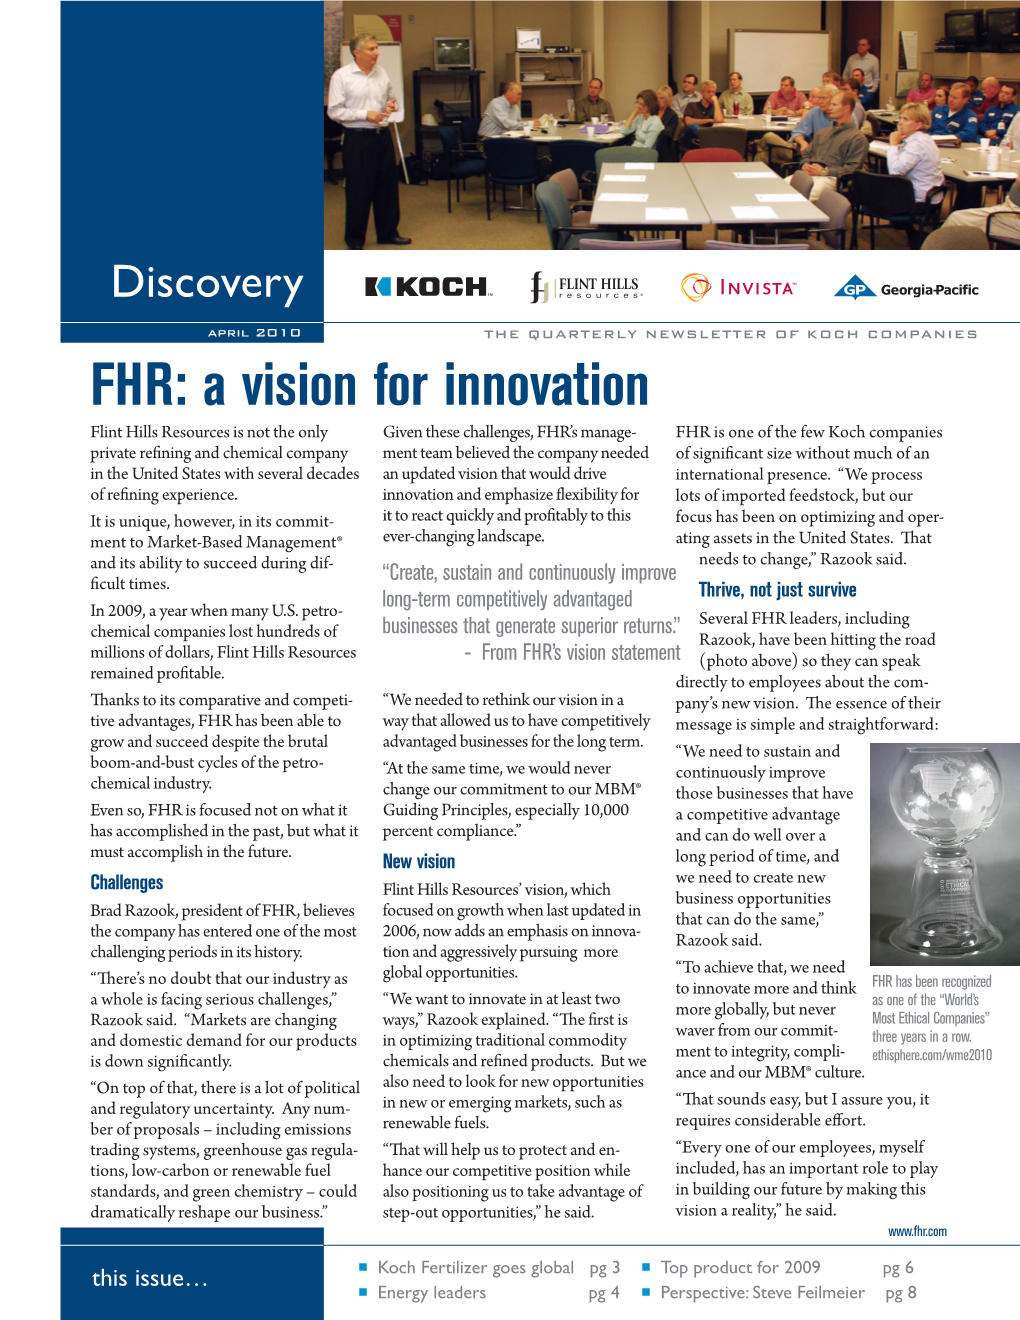 FHR: a Vision for Innovation